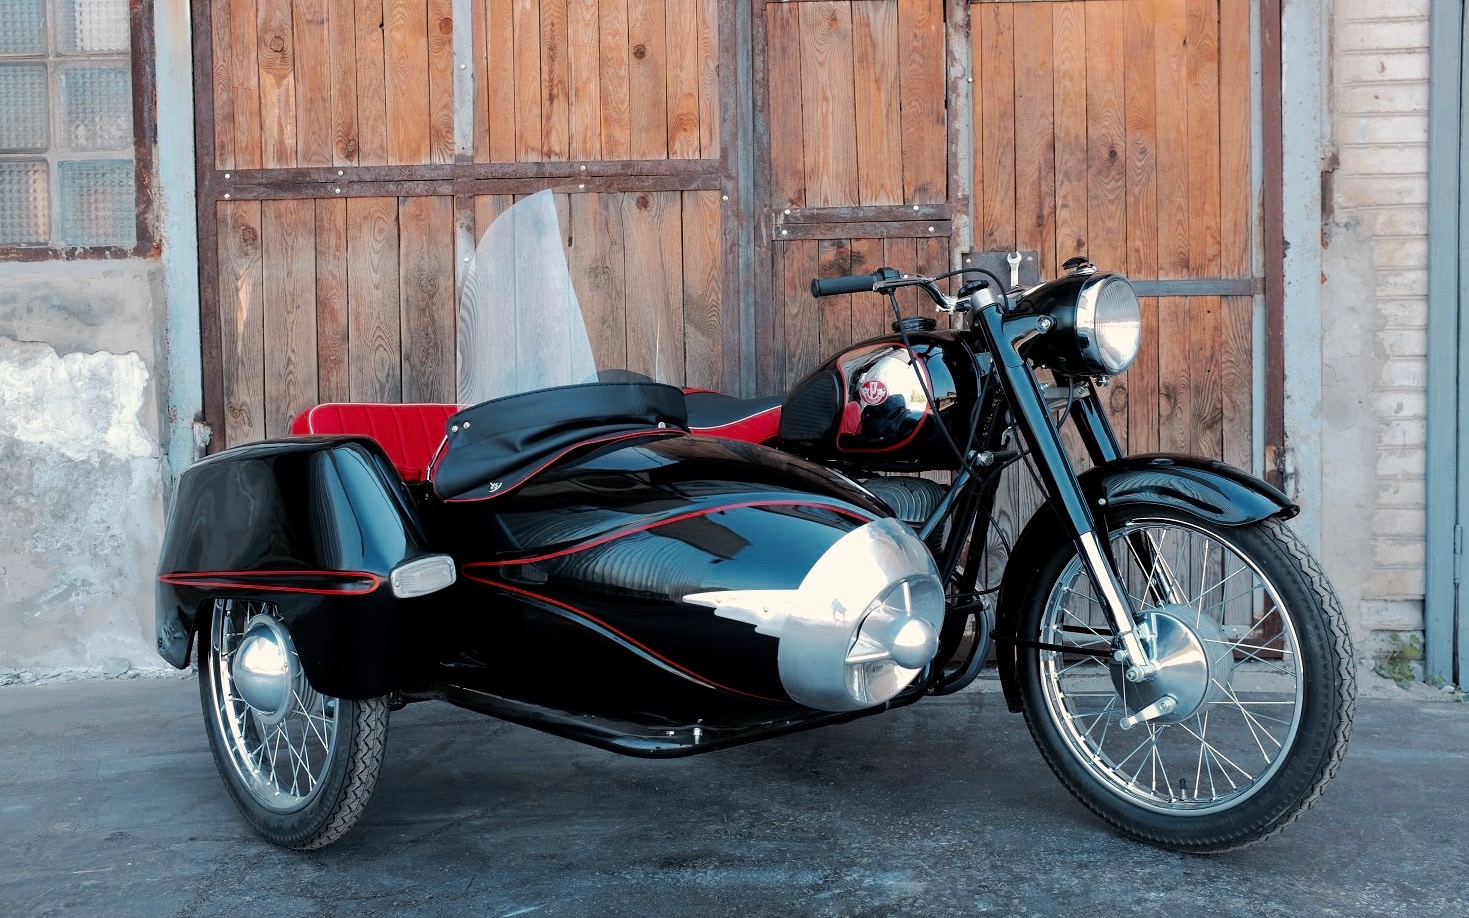 Байк чей автомобиль. Мотоцикл Панония 1967. Паннония-250 t5. Мотоцикл Панония 1960г.в. Мотоцикл Pannonia t5.